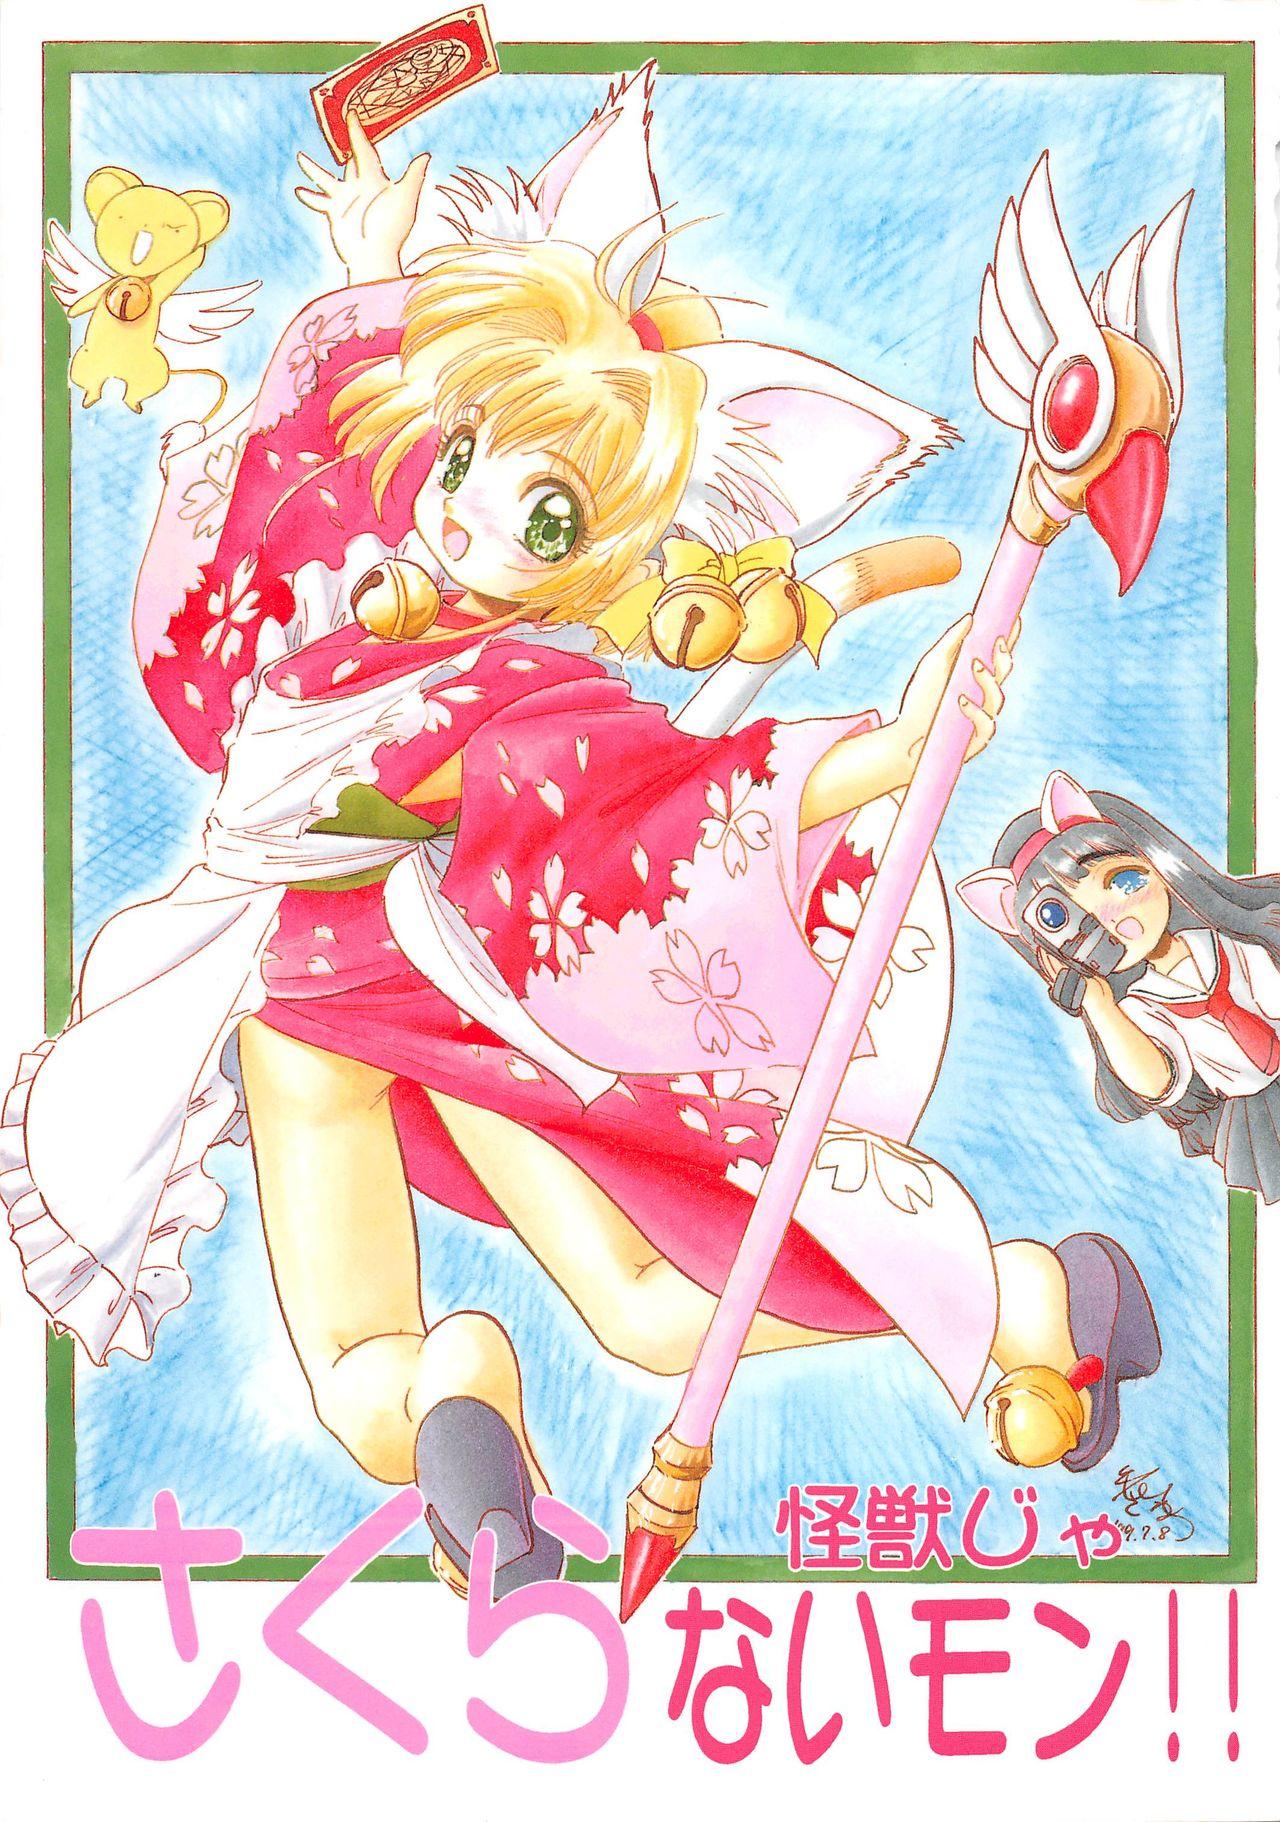 Moan Sakura Kaijuu Janai Mon!! - Cardcaptor sakura Sakura taisen Chudai - Page 1